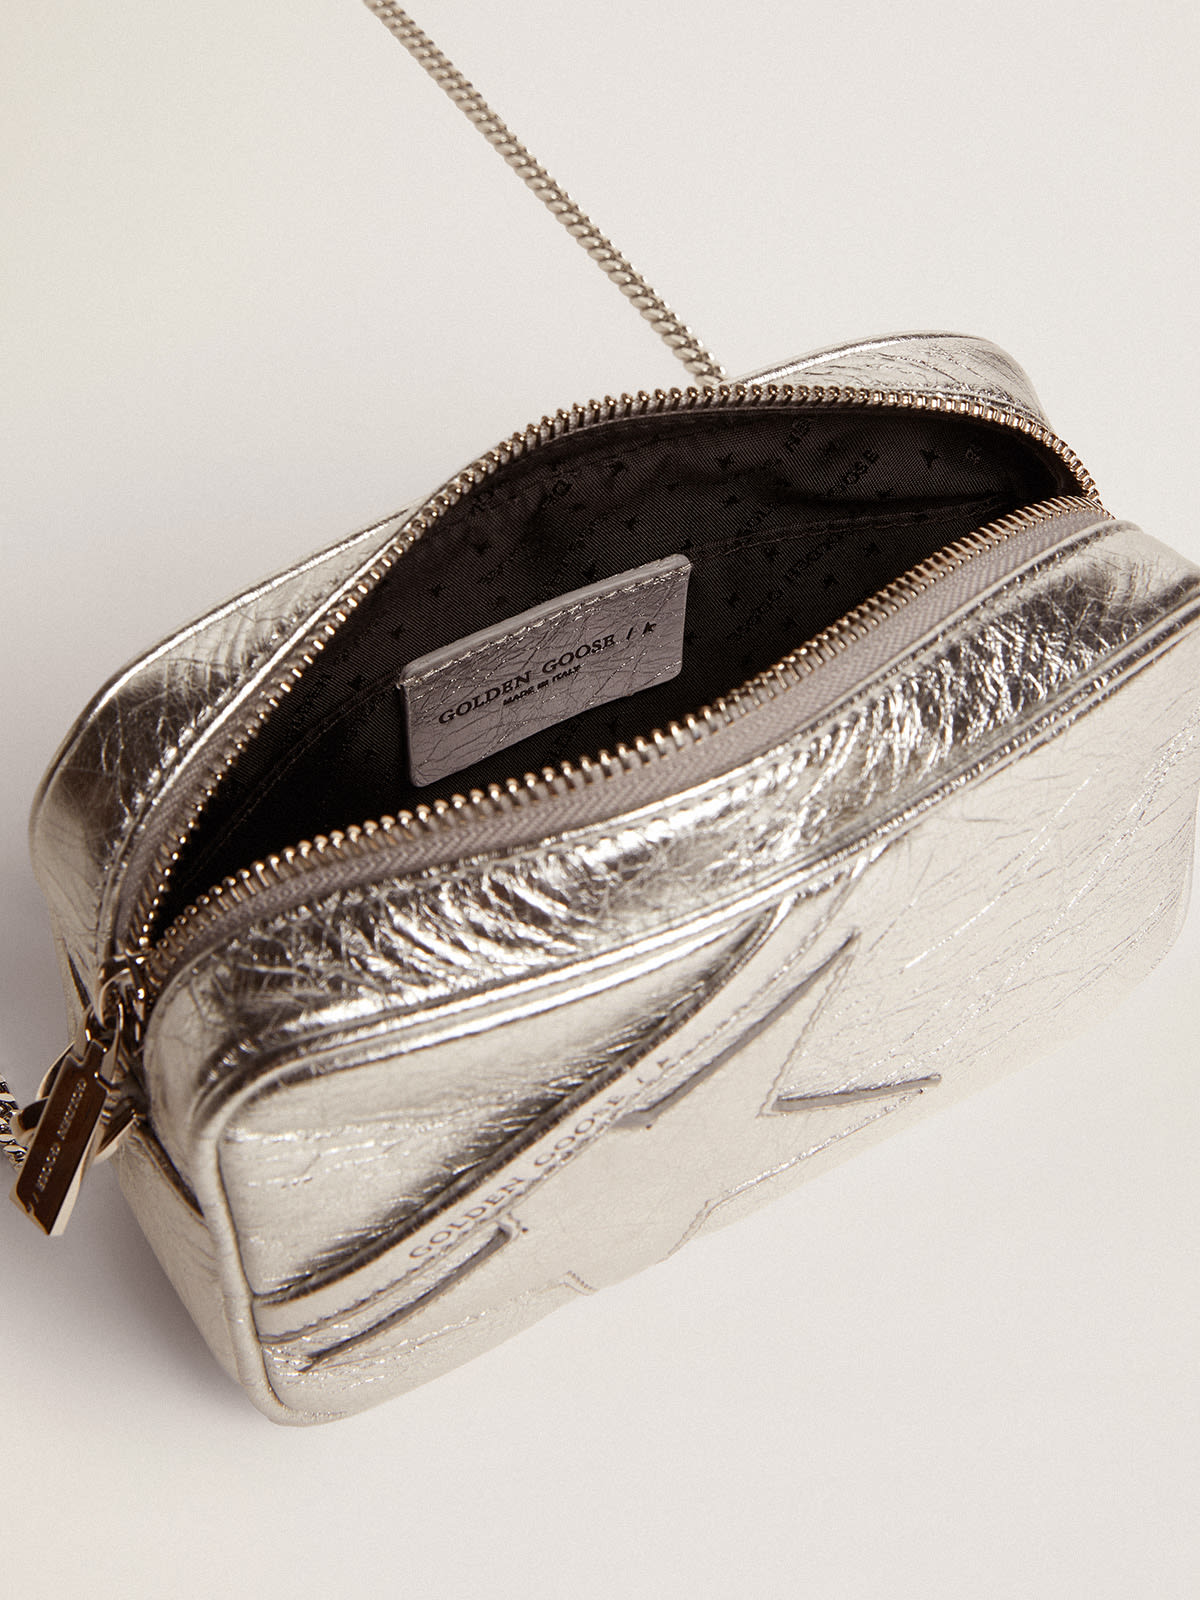 Golden Goose - Bolso Mini Star Bag en piel laminada color plateado con estrella tono sobre tono in 